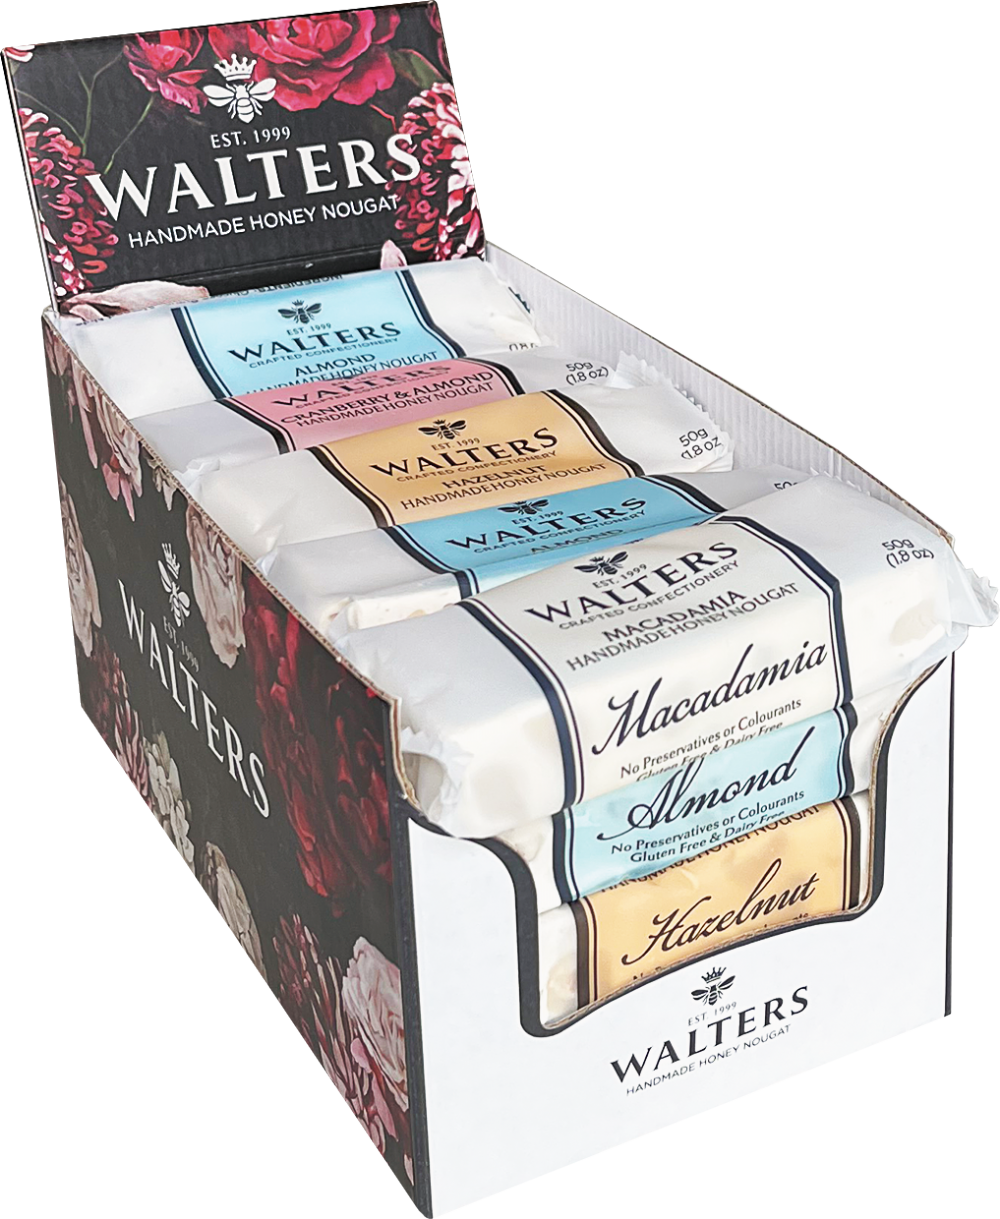 Walter's Luxury Handmade Honey Nougat - Macadamia, Almond, Cranberry & Almond